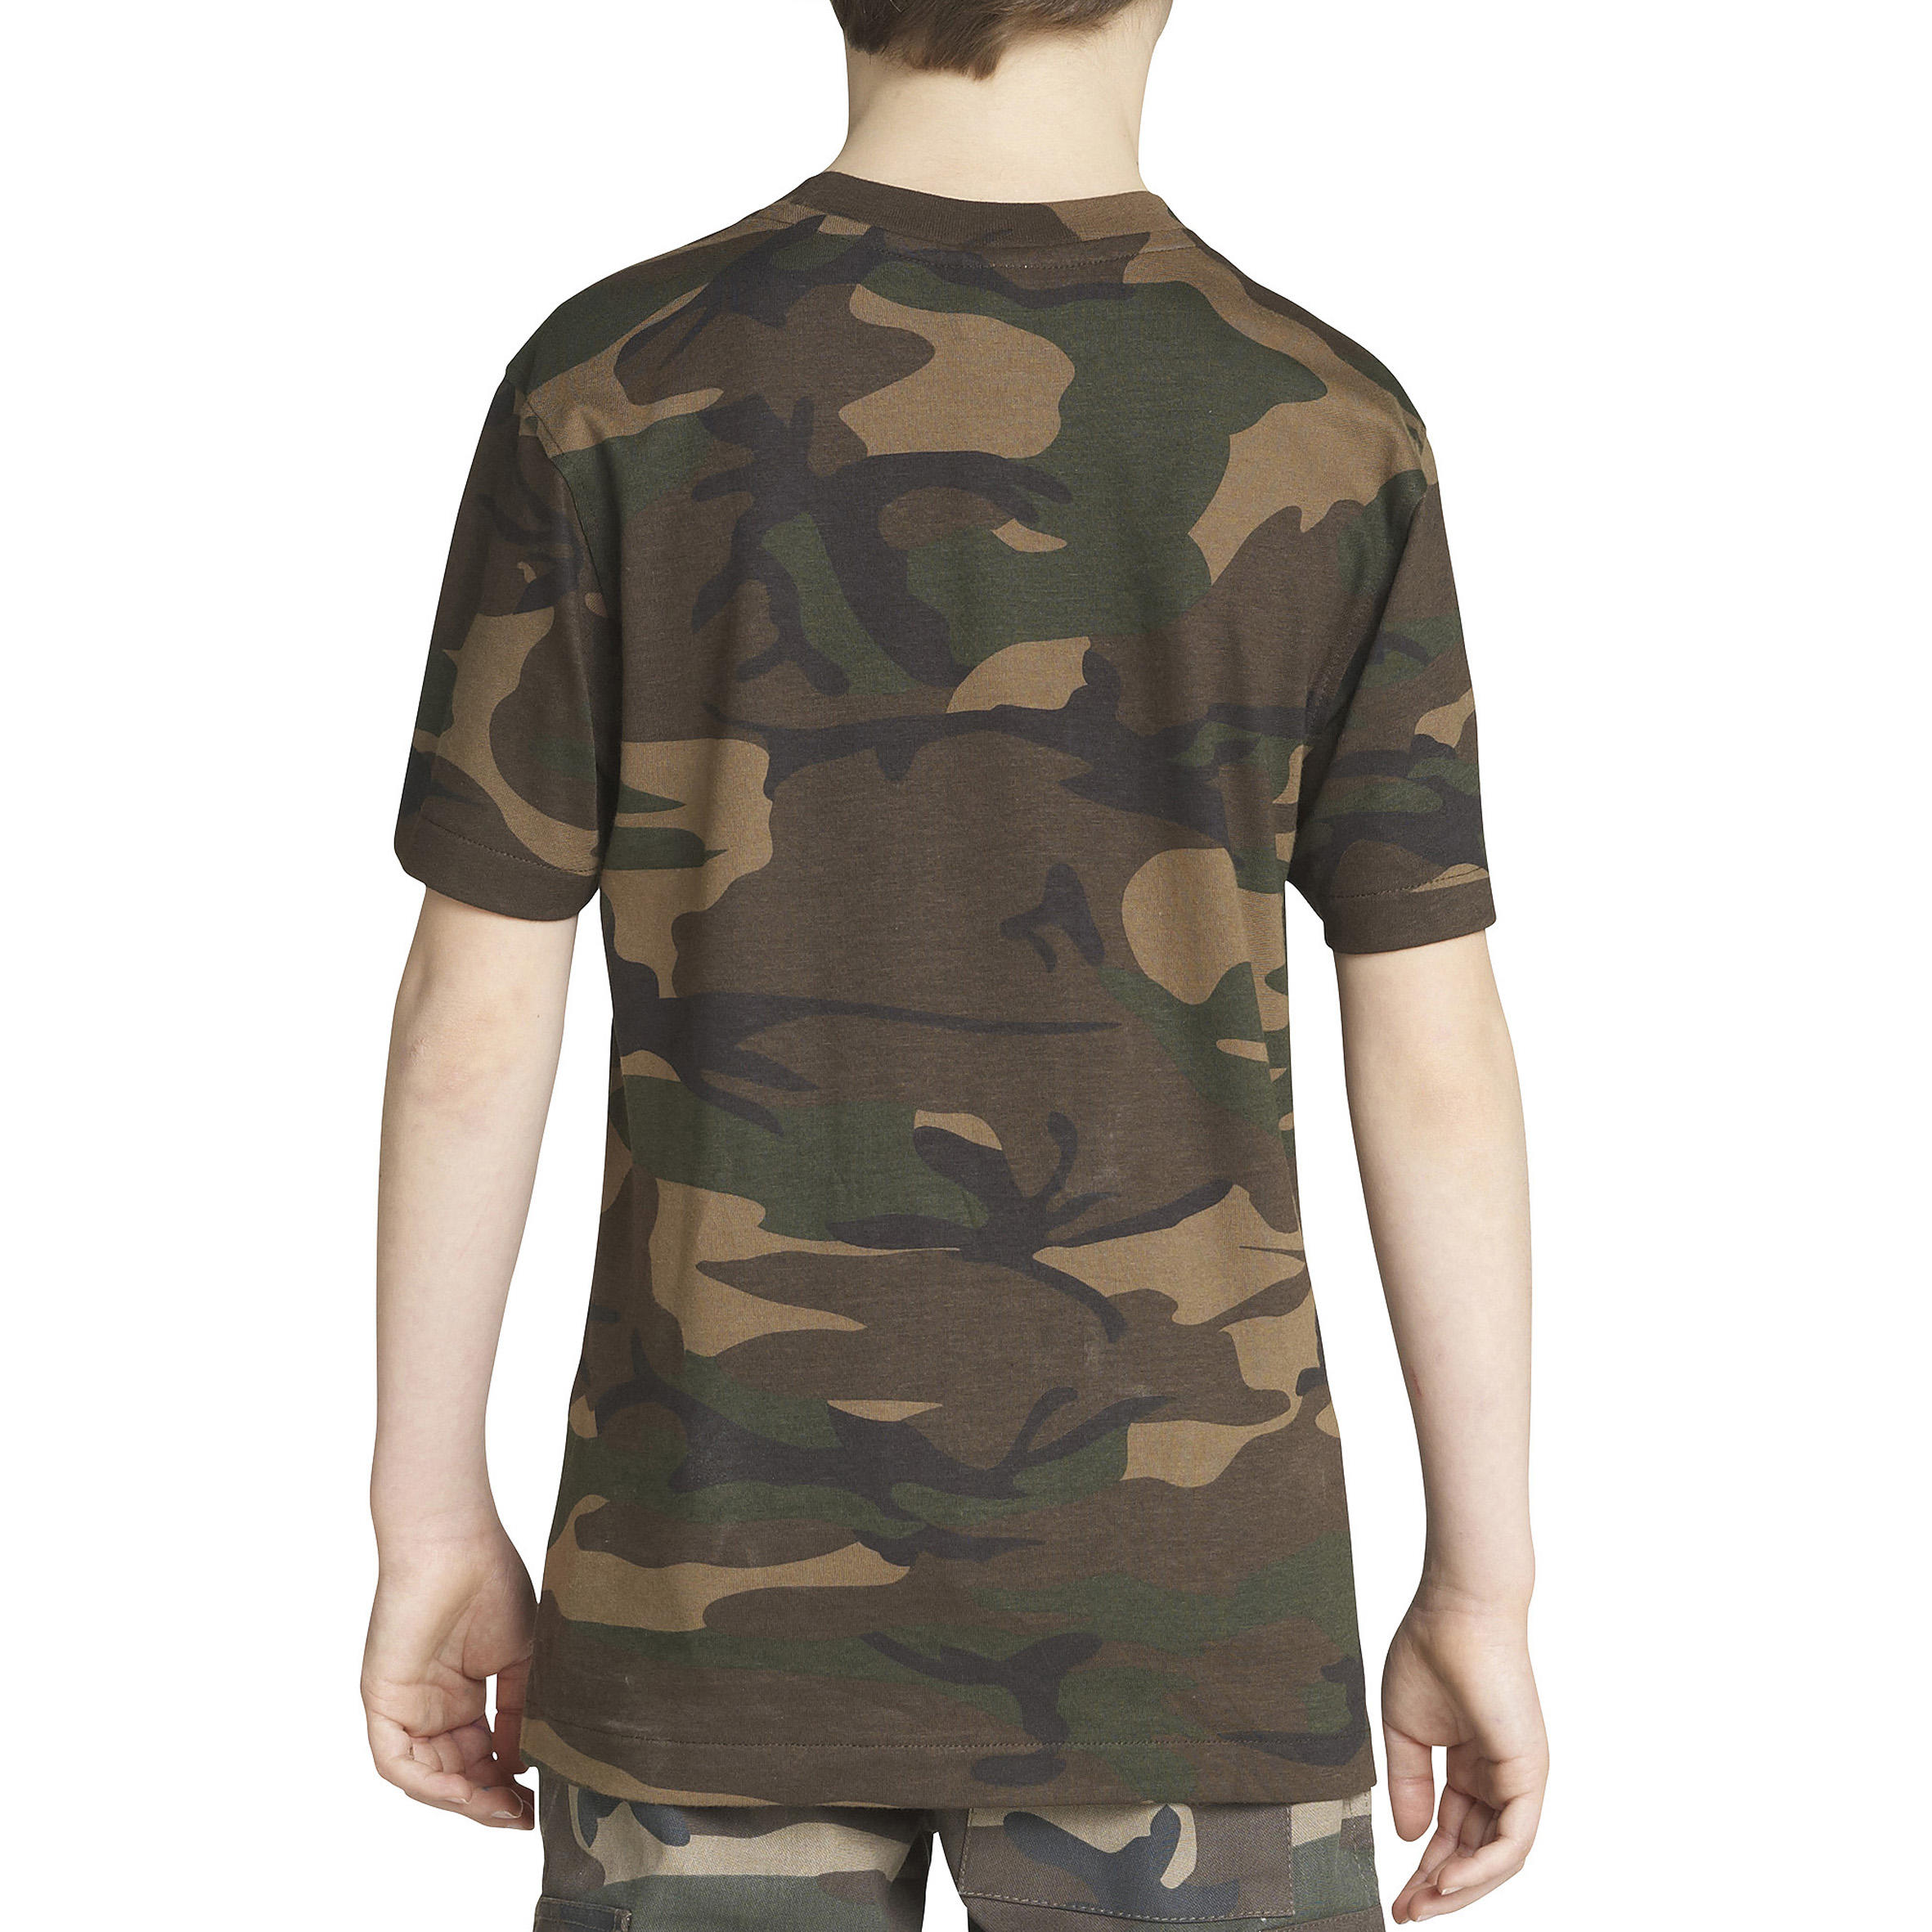 Namib 100 camouflage WL hunting T-shirt - green 2/3